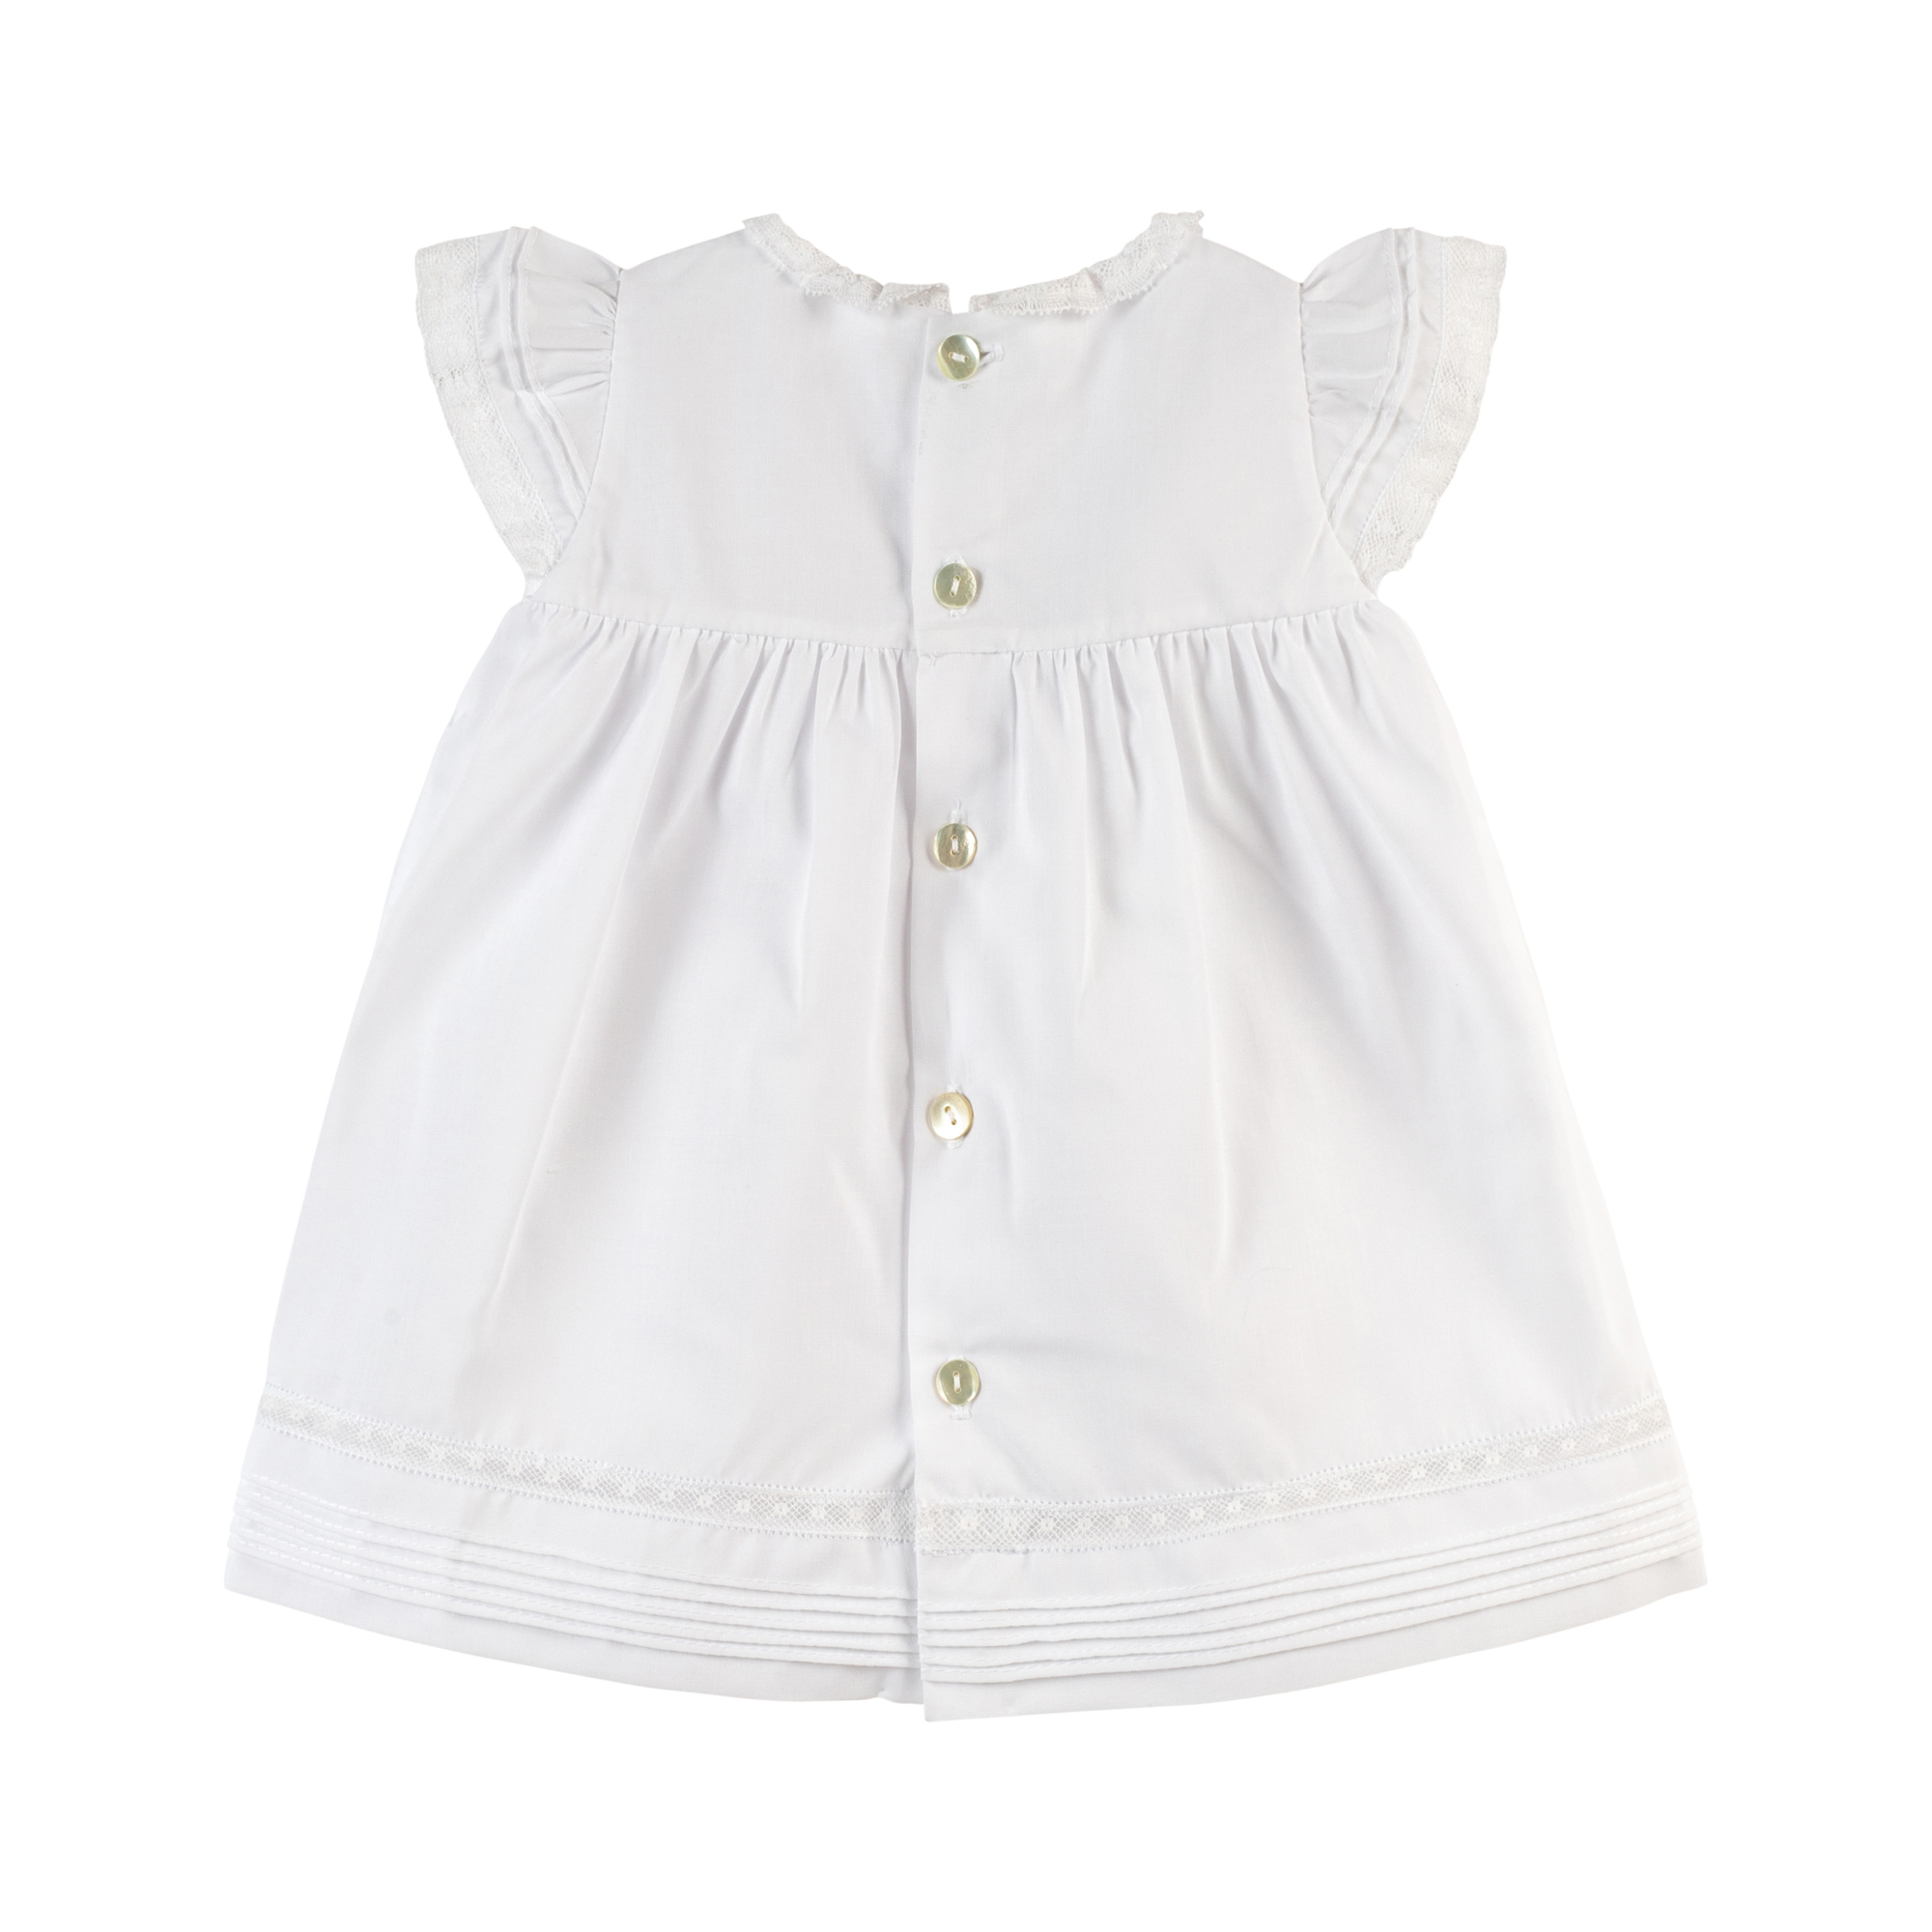 Top 10 white baby girls frocks designs // white birthday ballgown dresses  for baby girls - YouTube